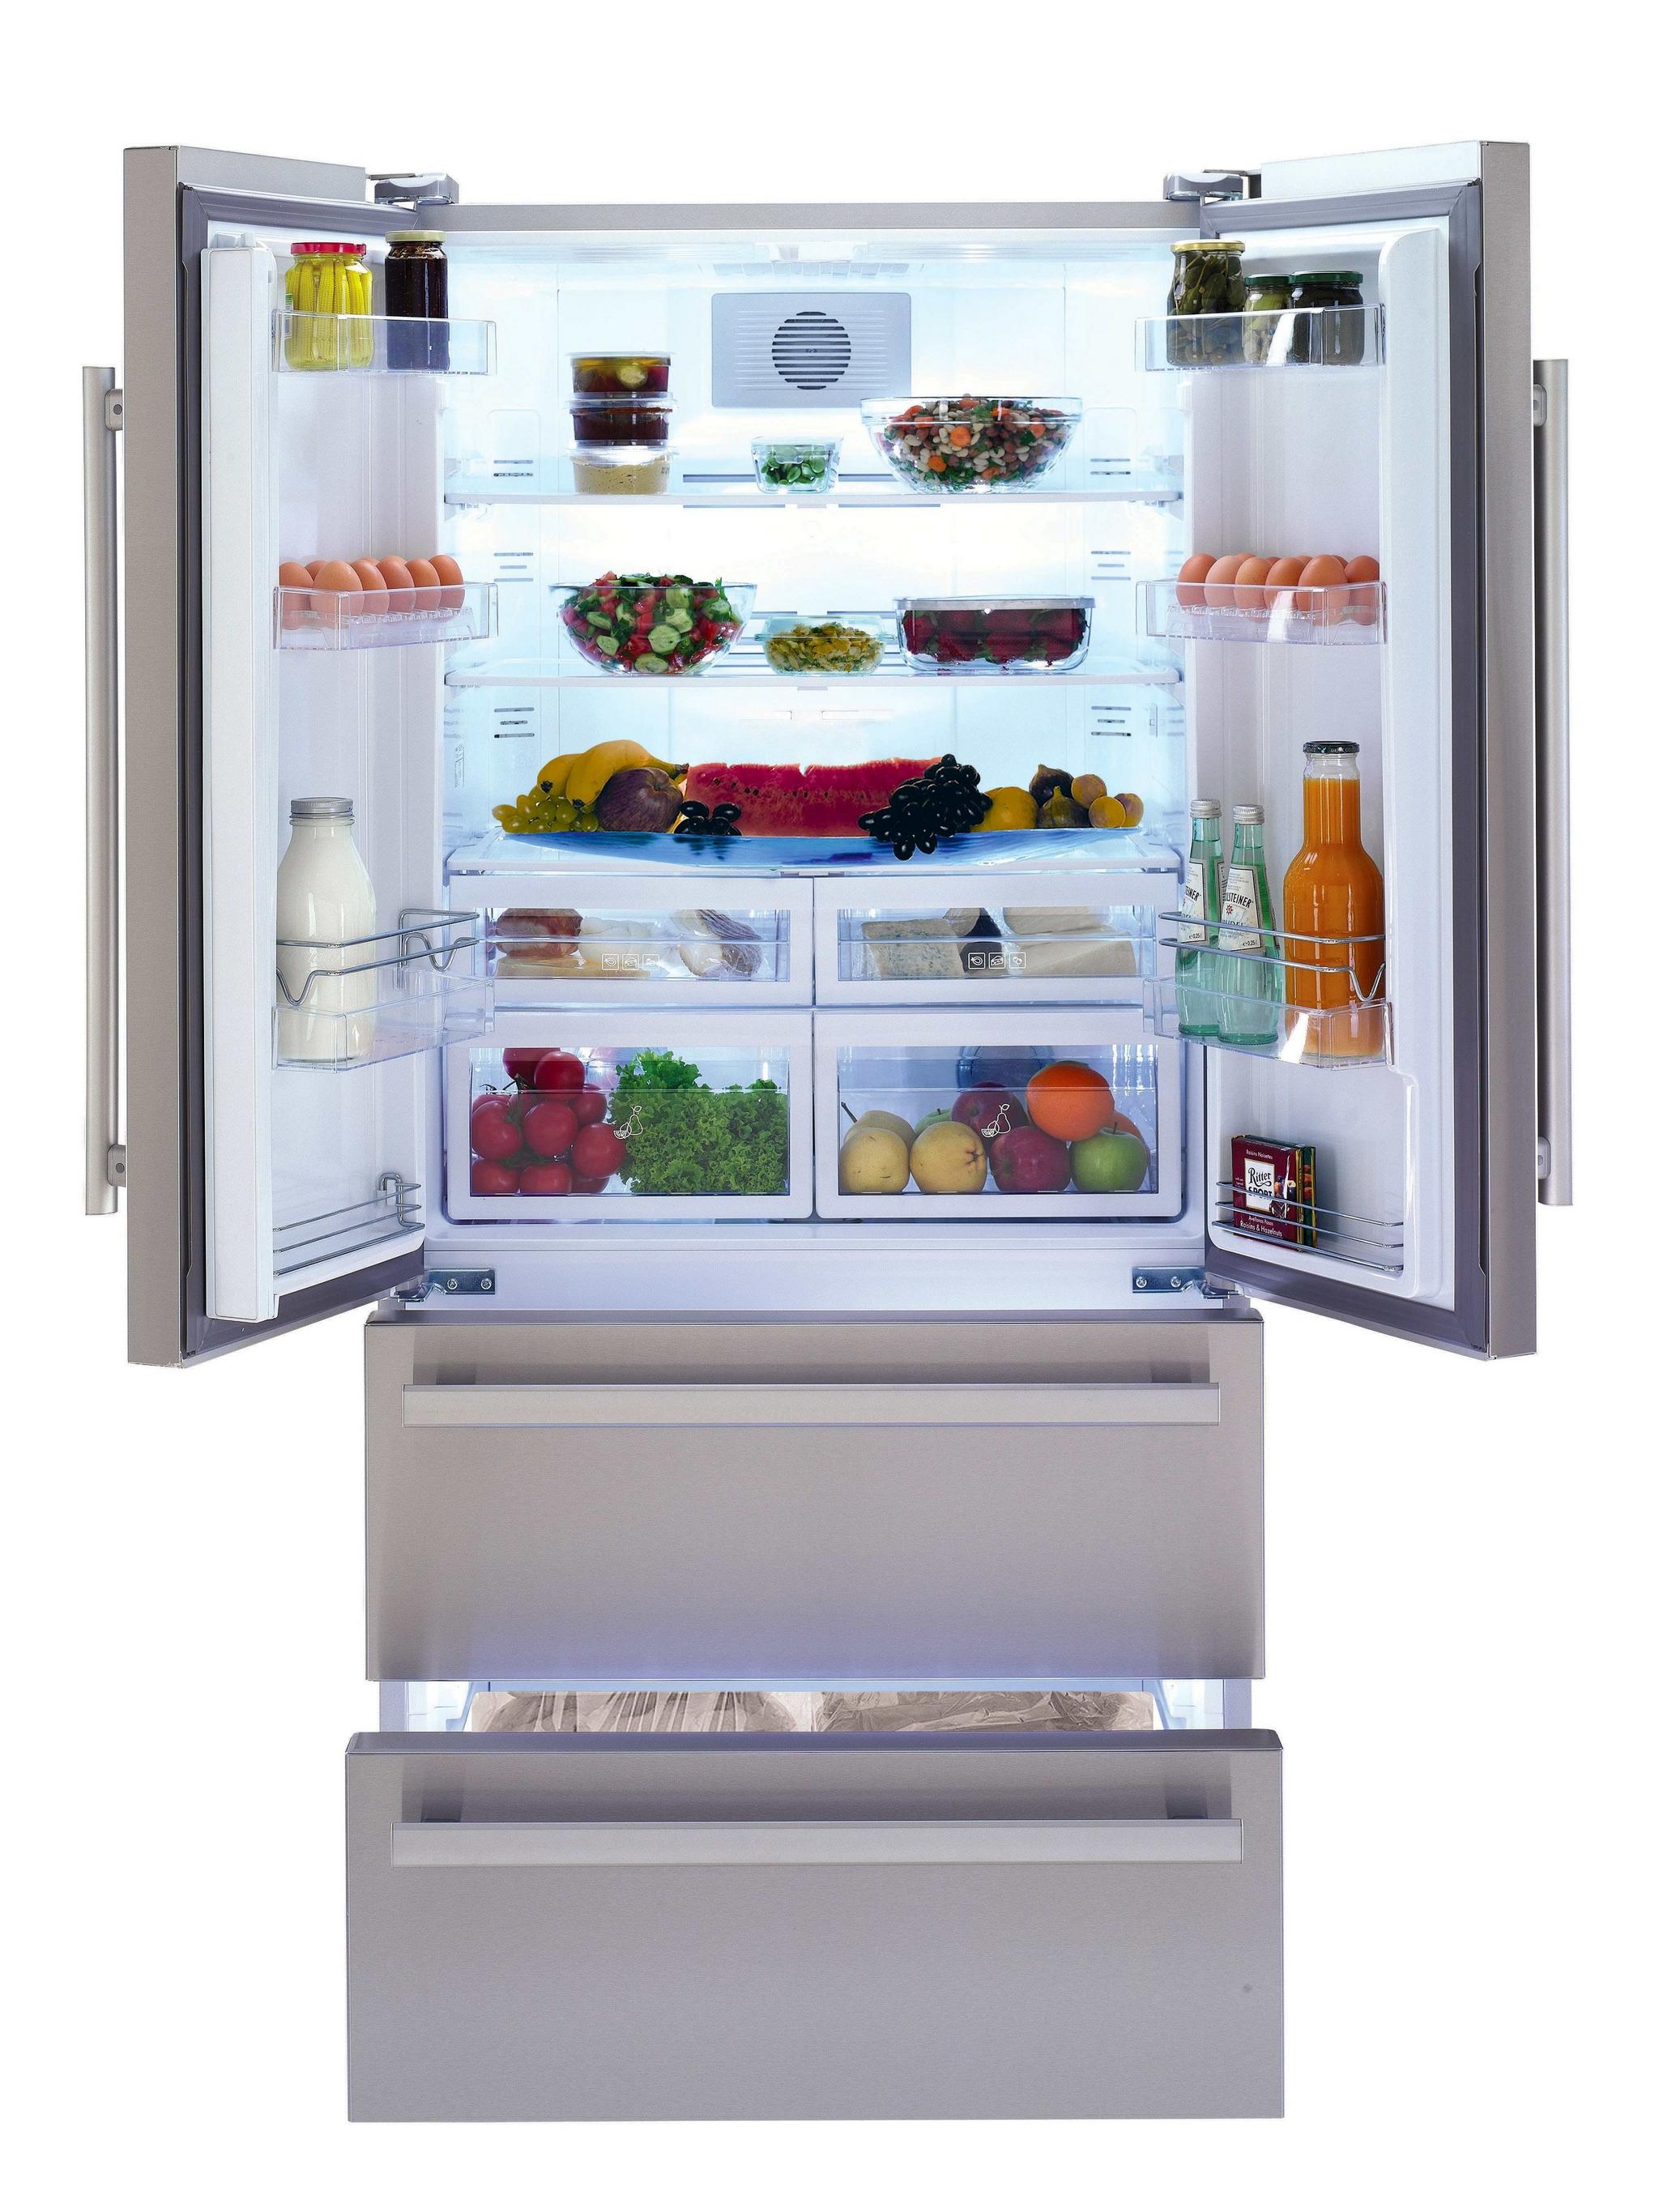 Beko Bottom Freezer refrigerator  - 21 CFT